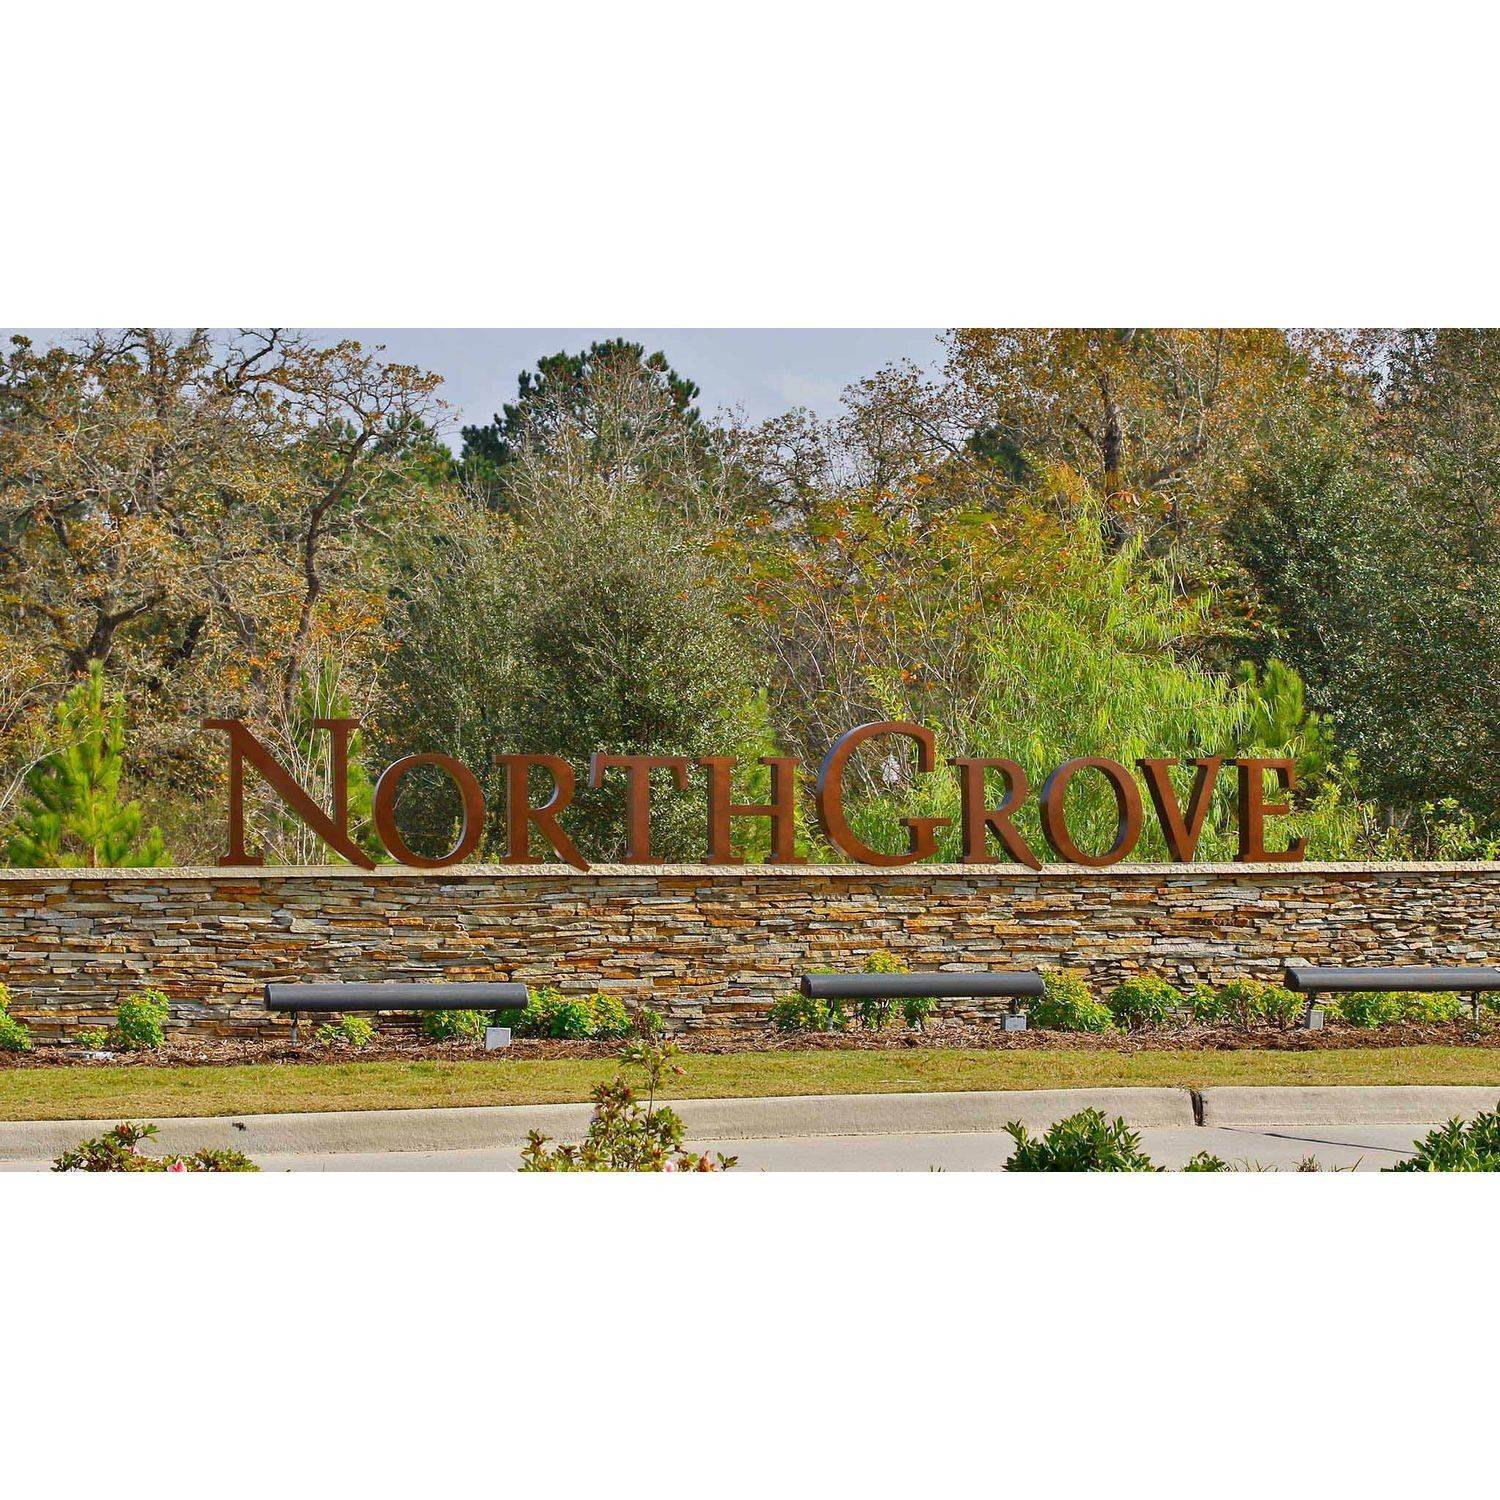 NorthGrove 50' building at 7385 Grandview Meadow Drive, Magnolia, TX 77354